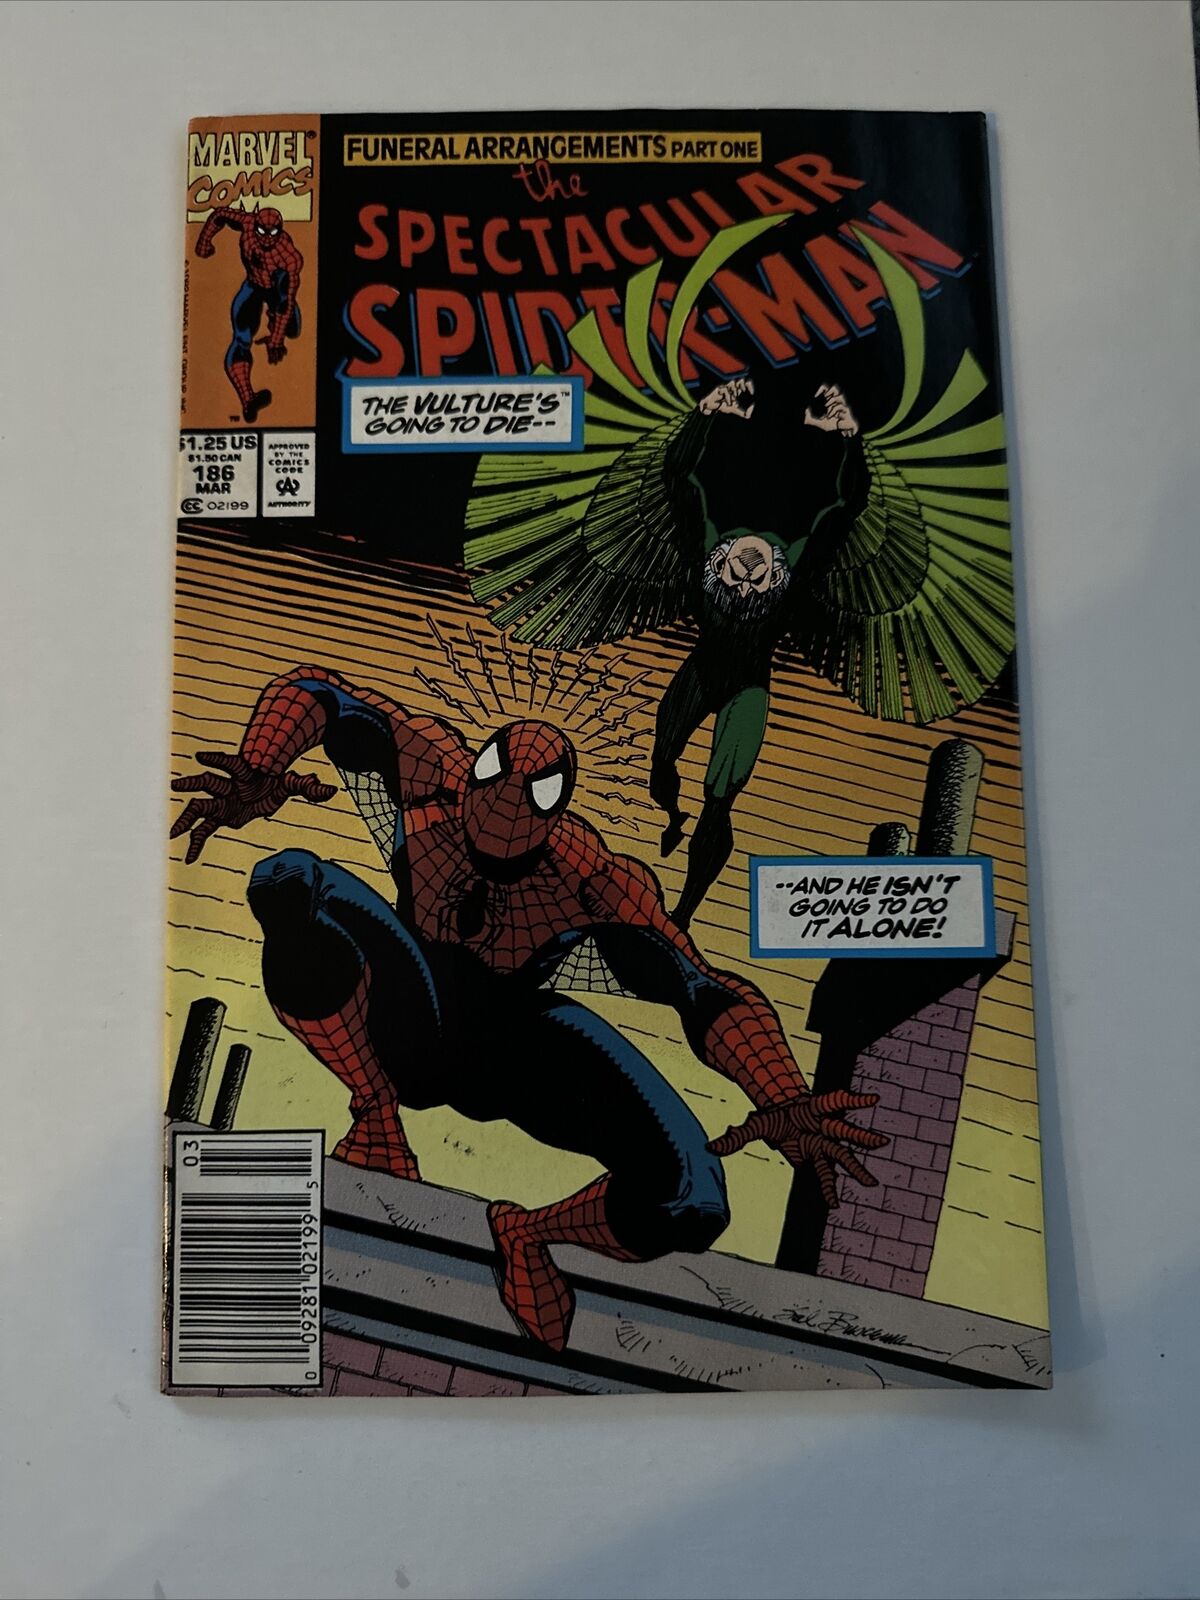 The Spectacular Spider-Man #1 (Marvel, December 1976)